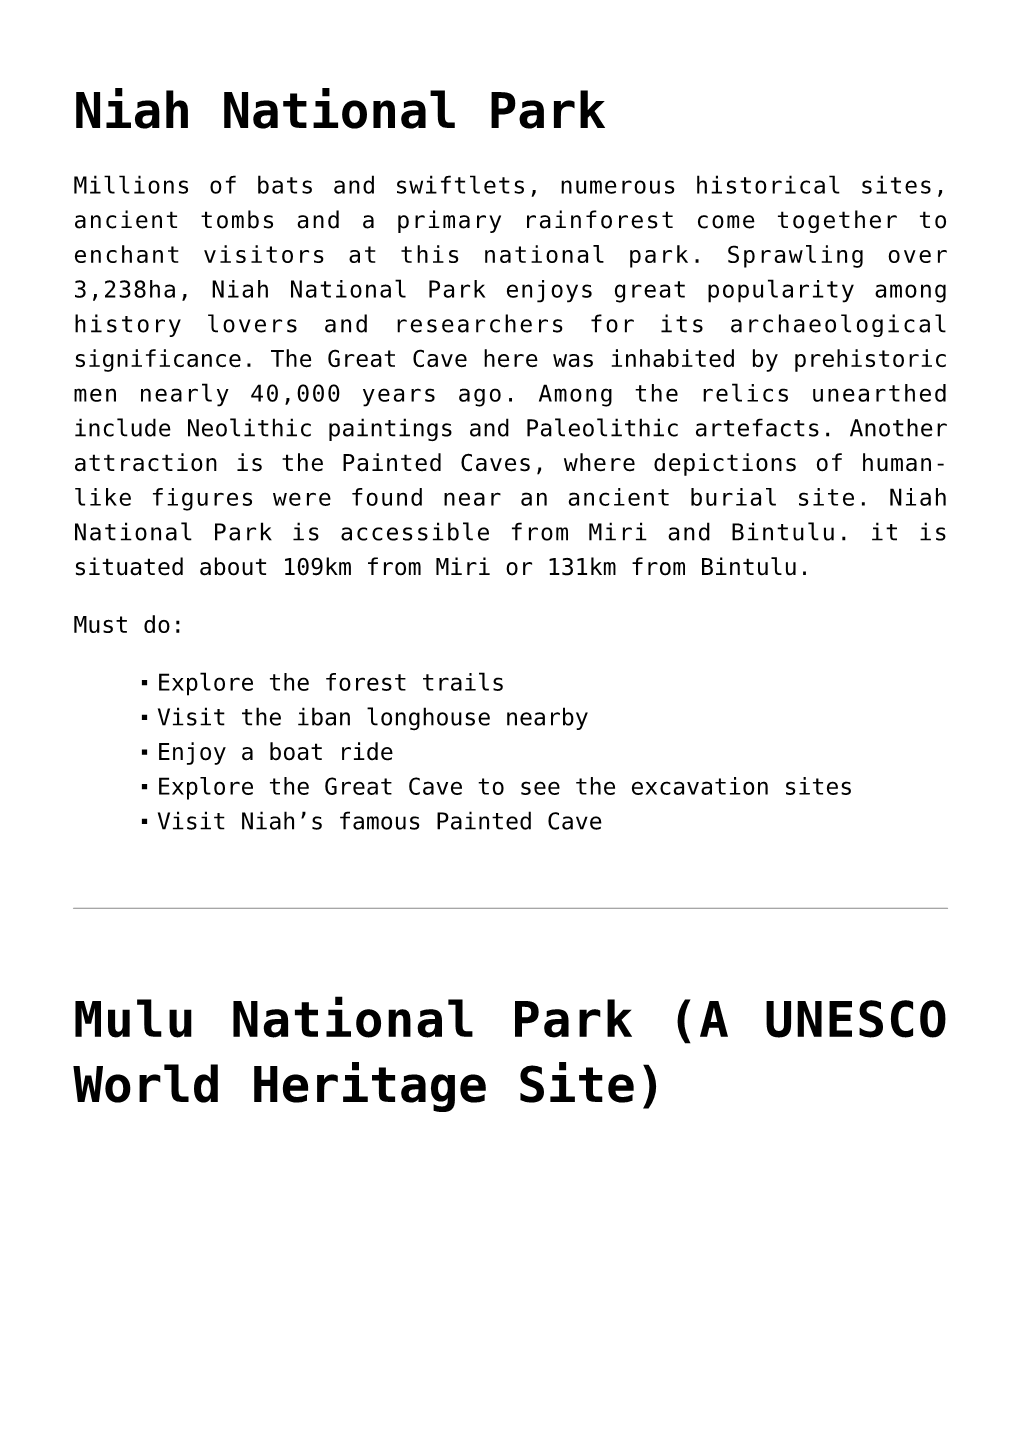 Niah National Park,Mulu National Park (A UNESCO World Heritage